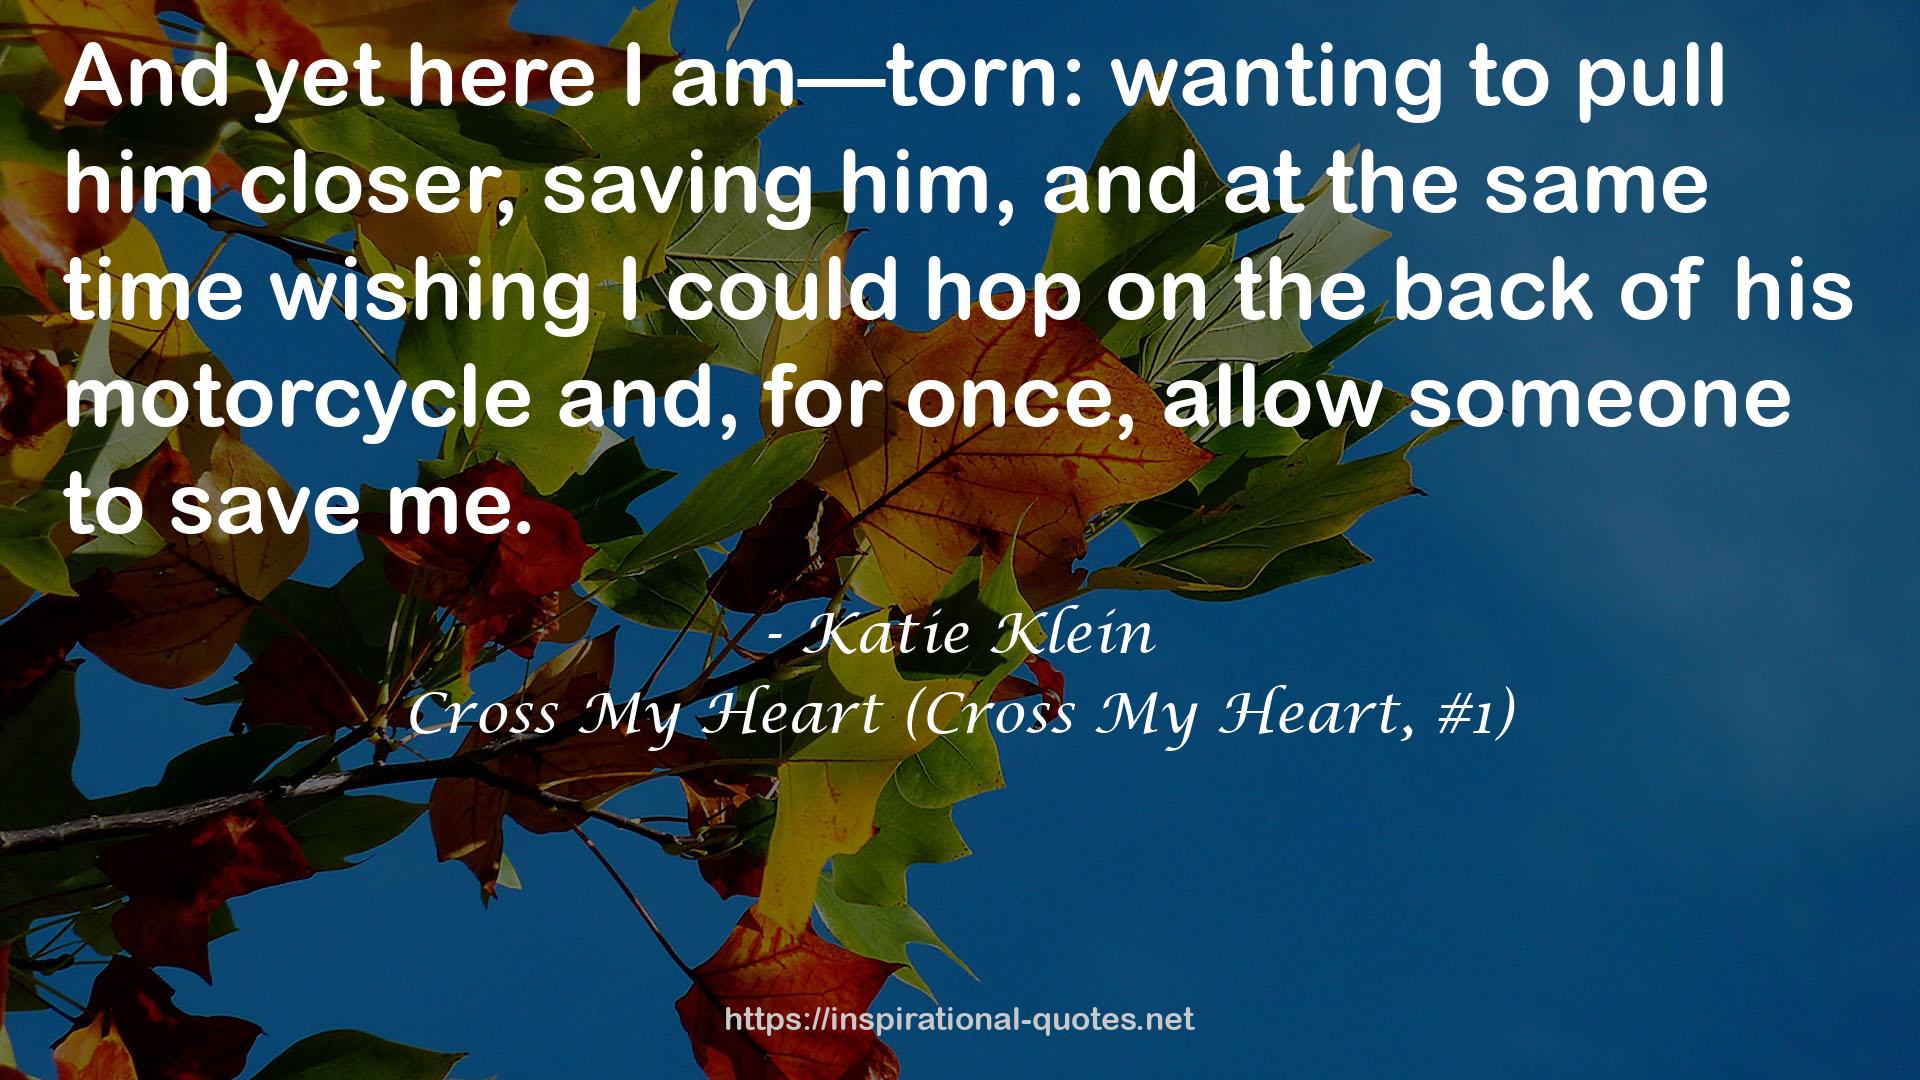 Cross My Heart (Cross My Heart, #1) QUOTES